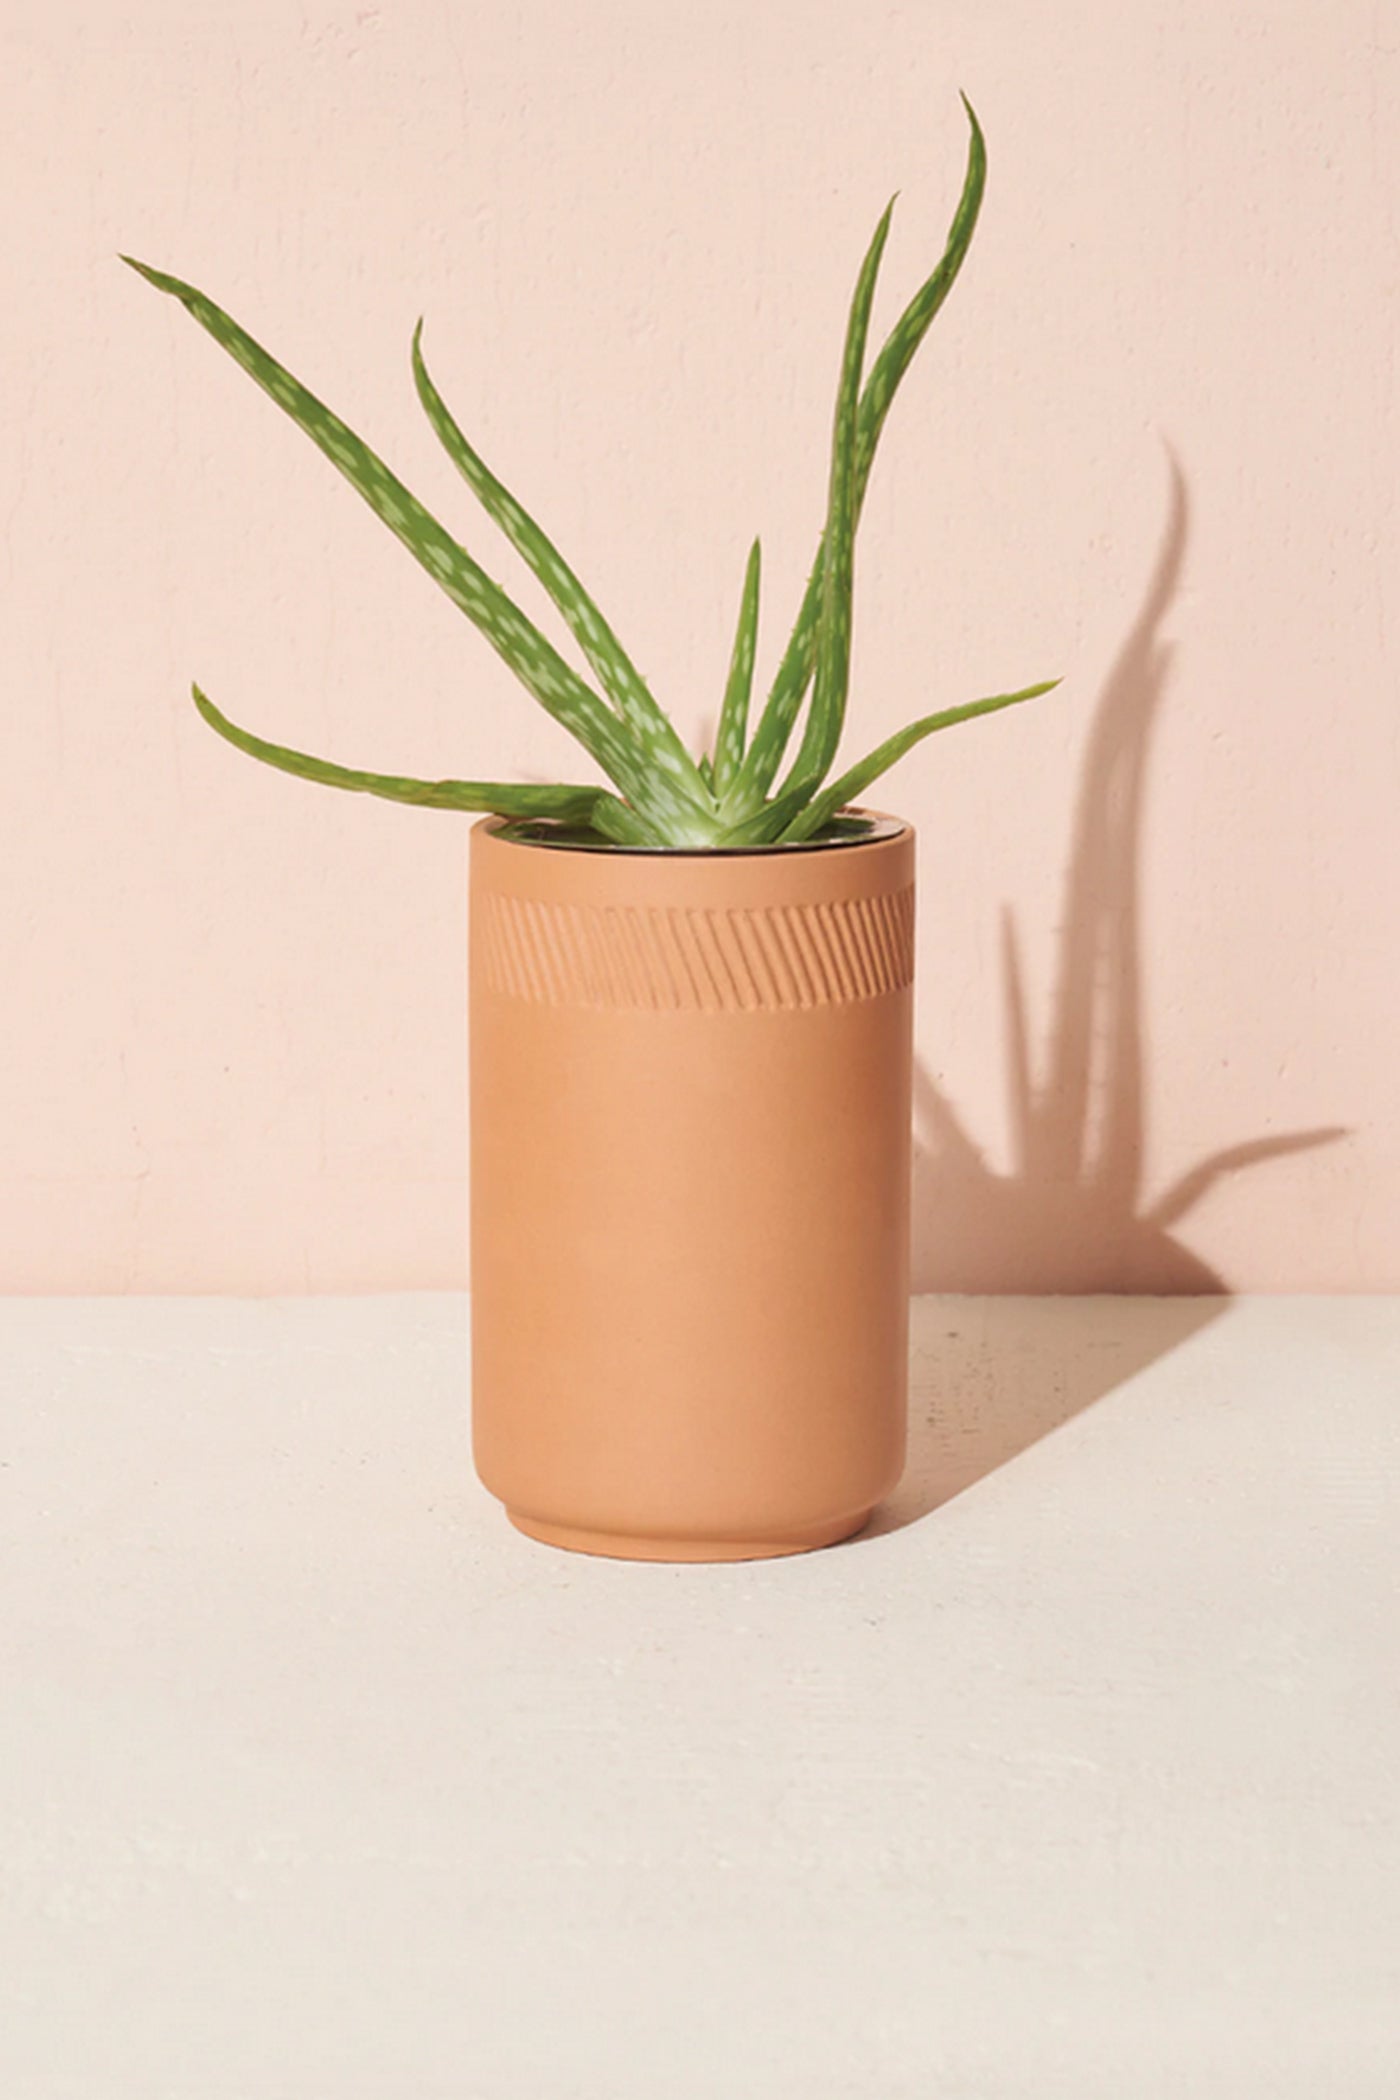 Aloe Terrcaotta Kit by Modern Sprout